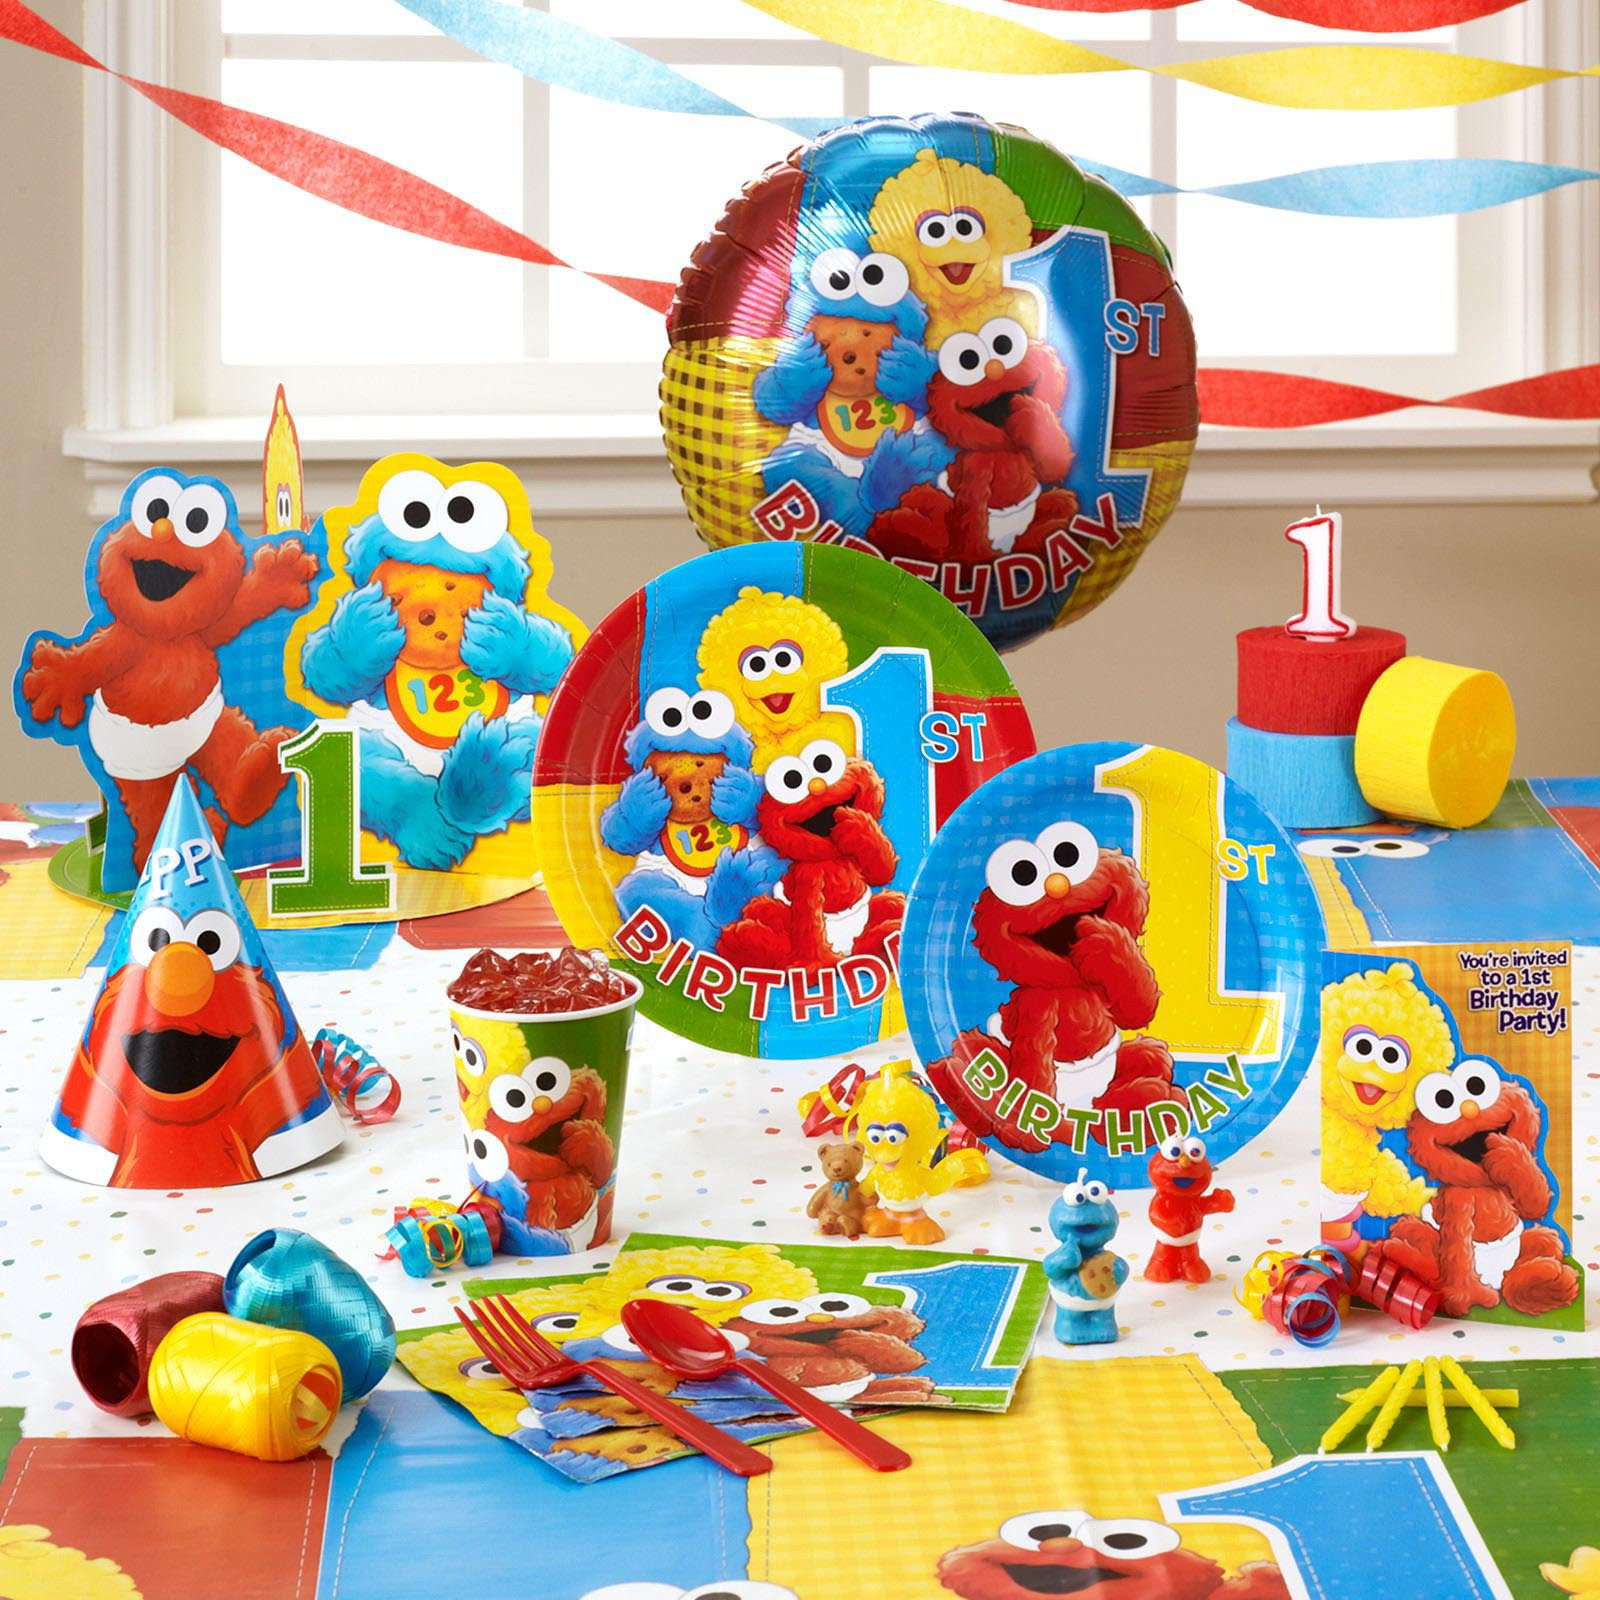 Sesame Street 1st Birthday Party Supplies
 Elmo Birthday Party Tips